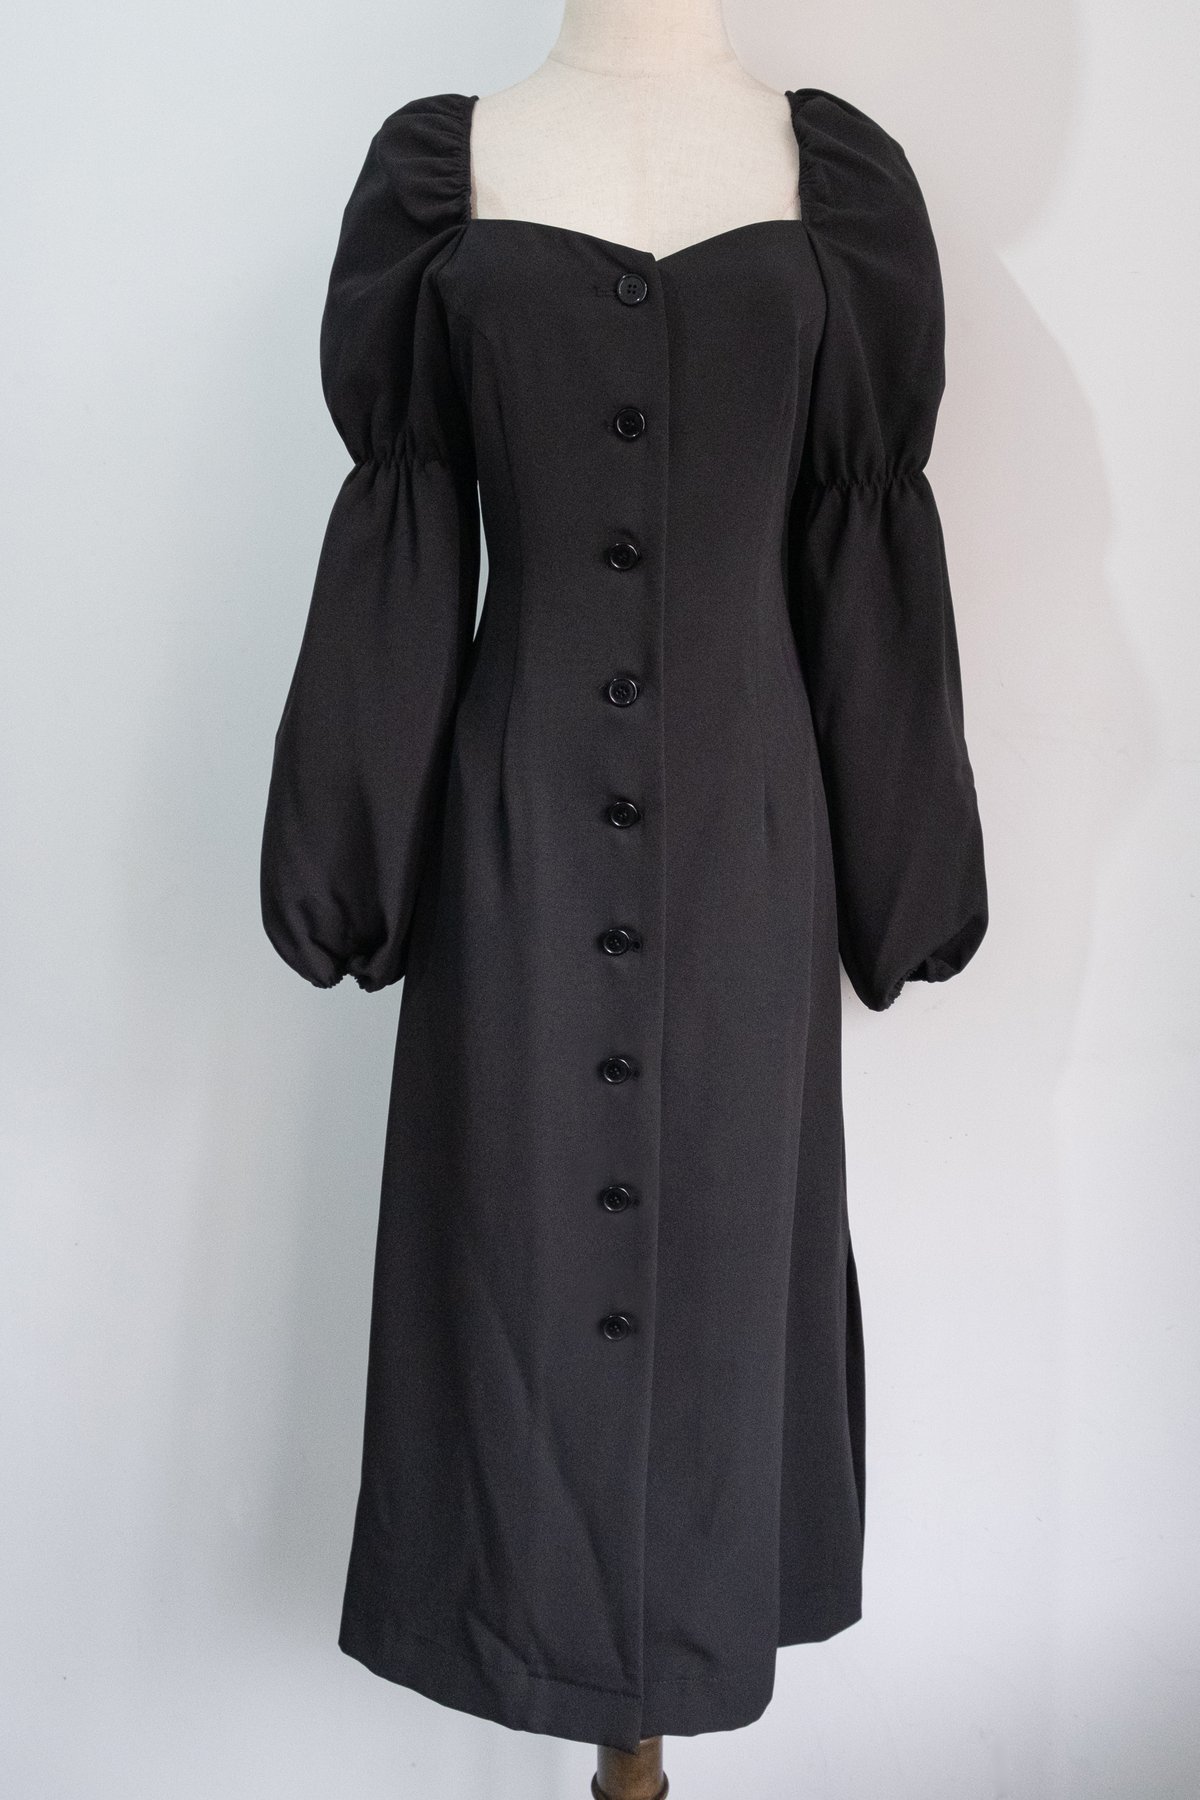 Image of SAMPLE SALE - Unreleased Dress 35